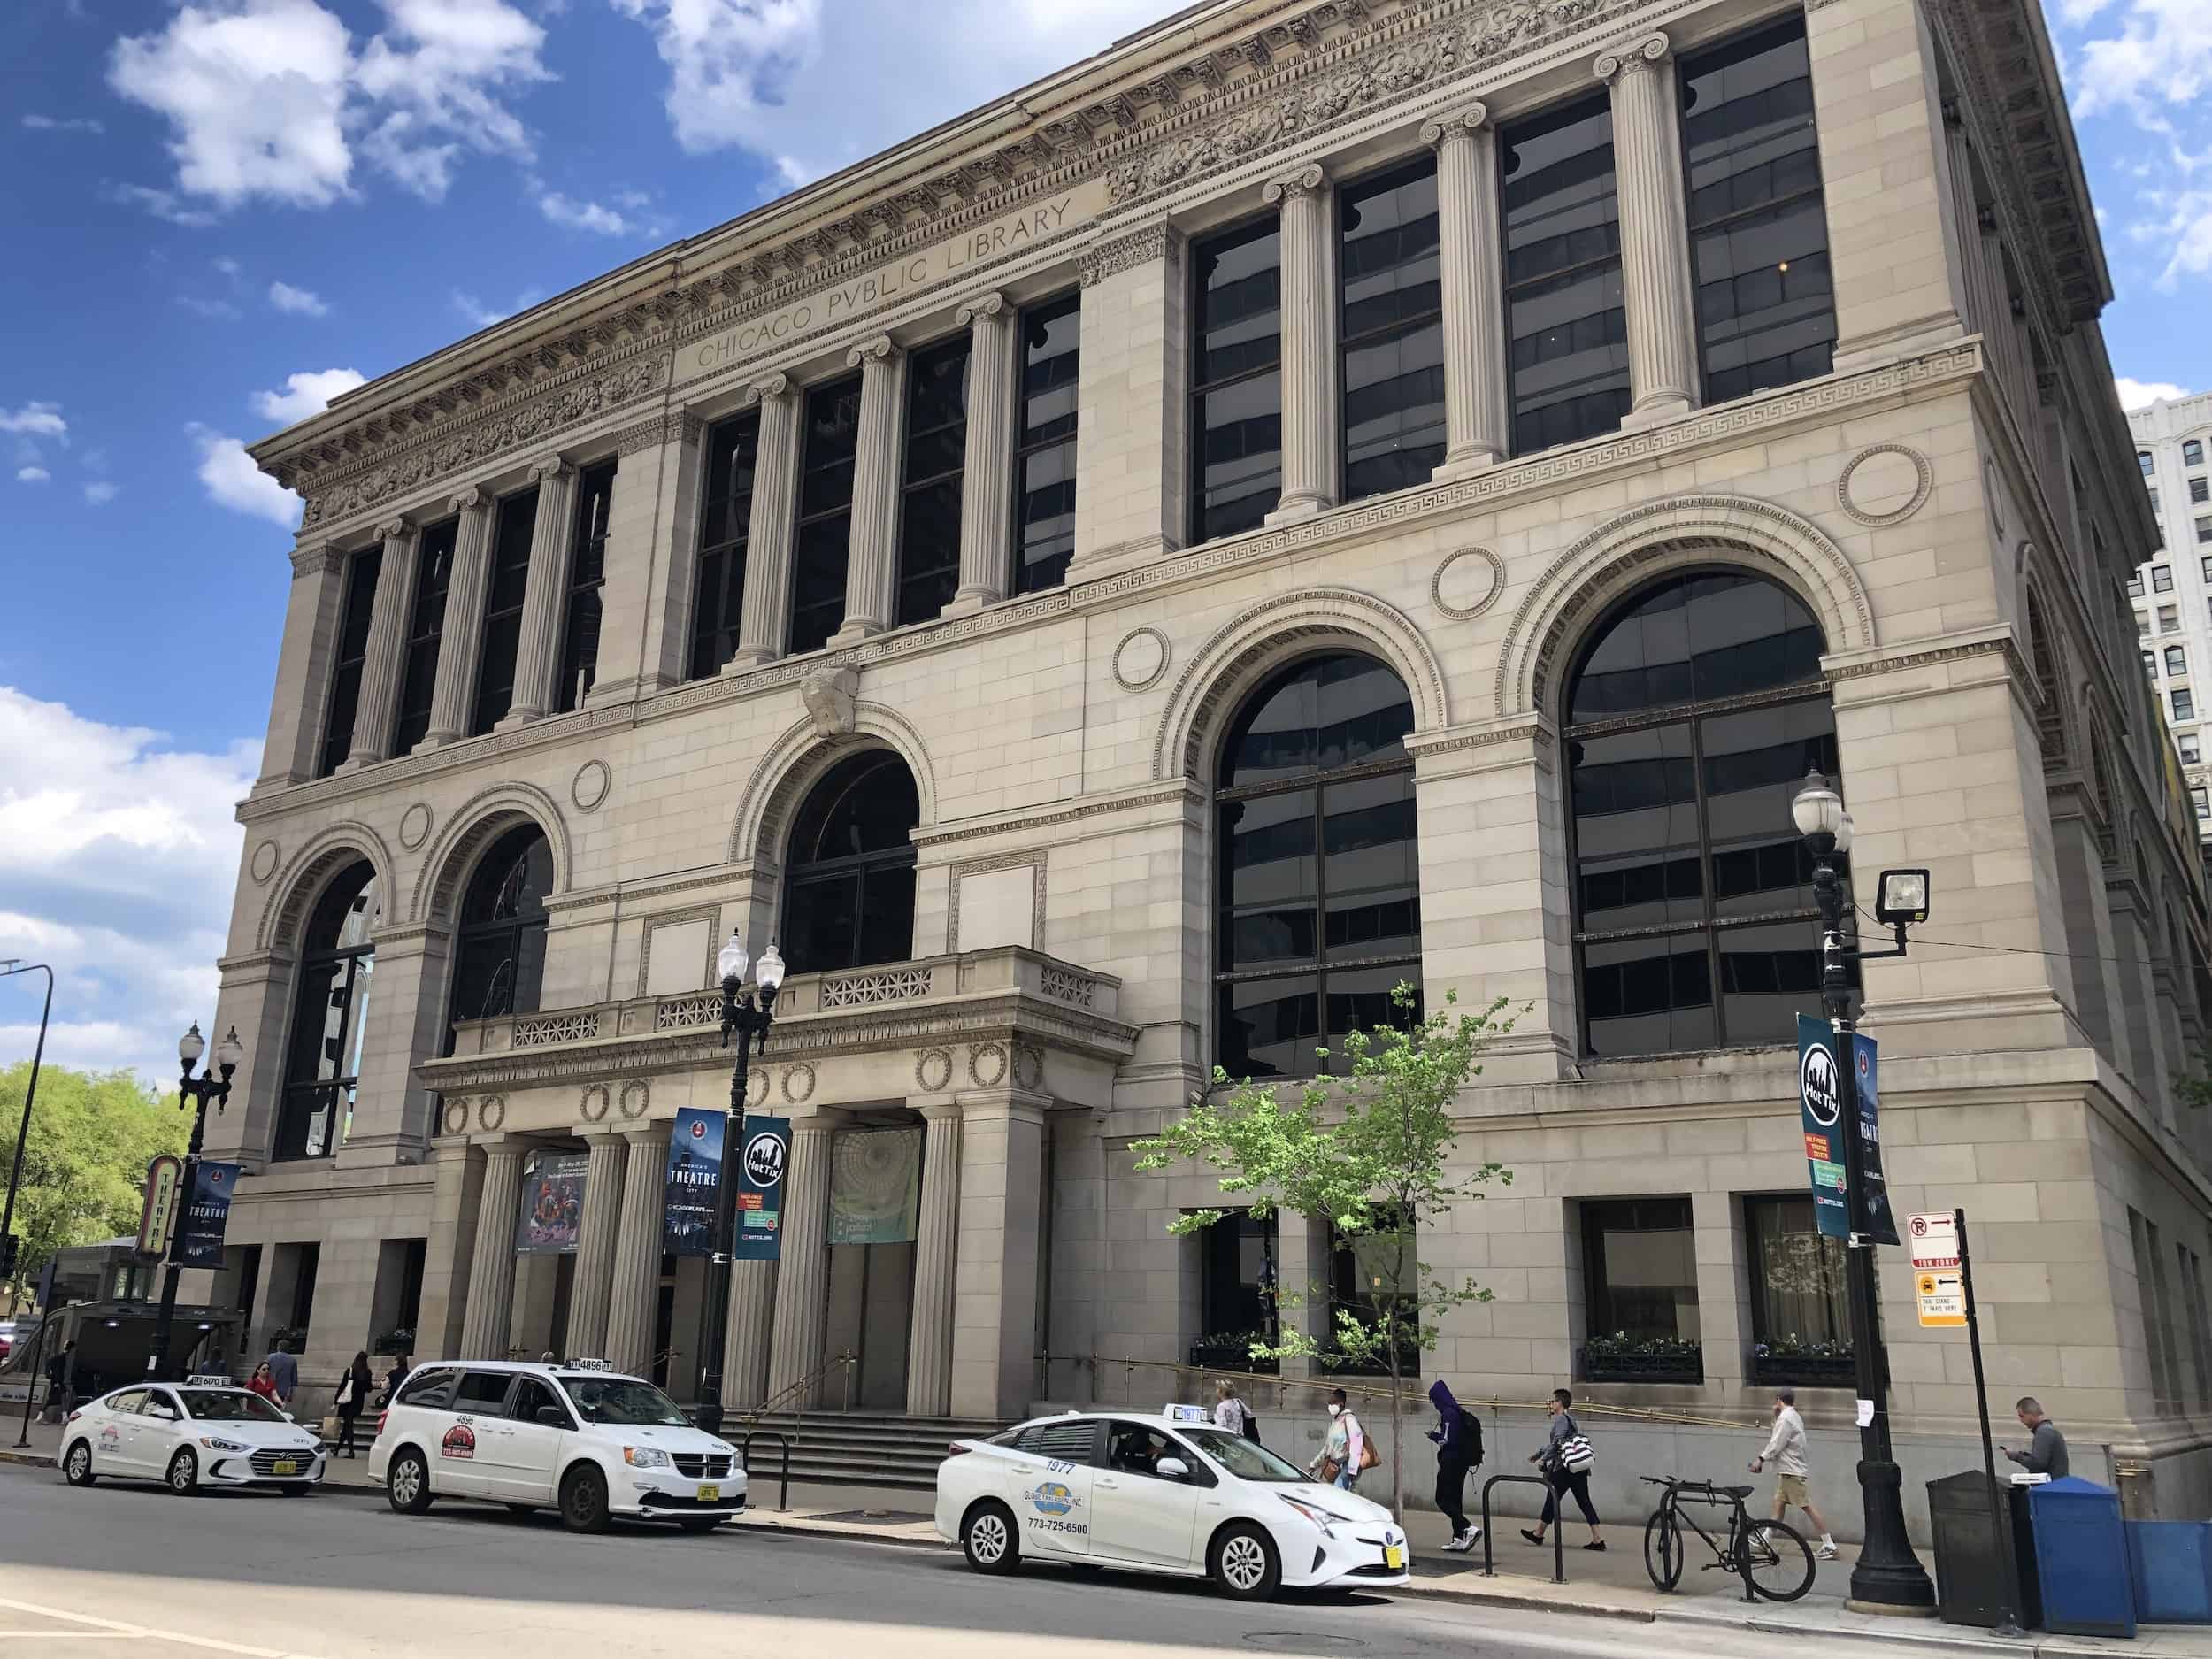 Randolph Street entrance of the Chicago Cultural Center